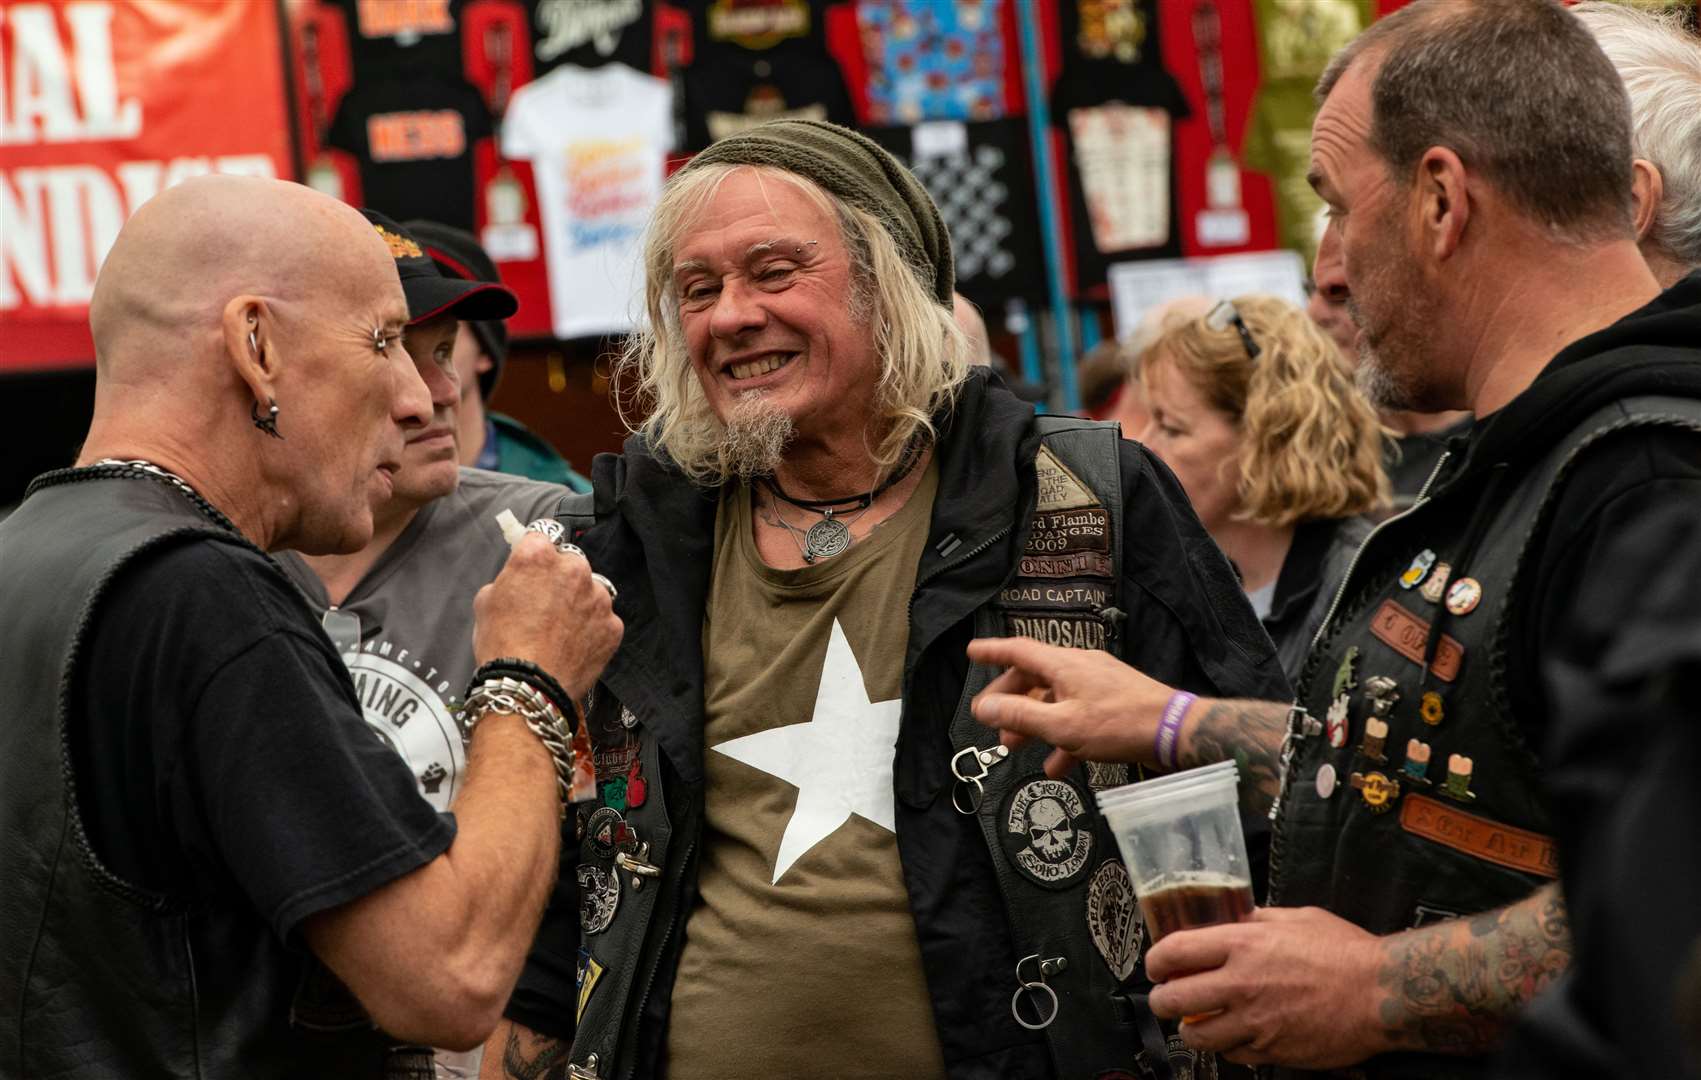 Music fans gather at Ramblin' Man Fair 2019 Picture: Chris White